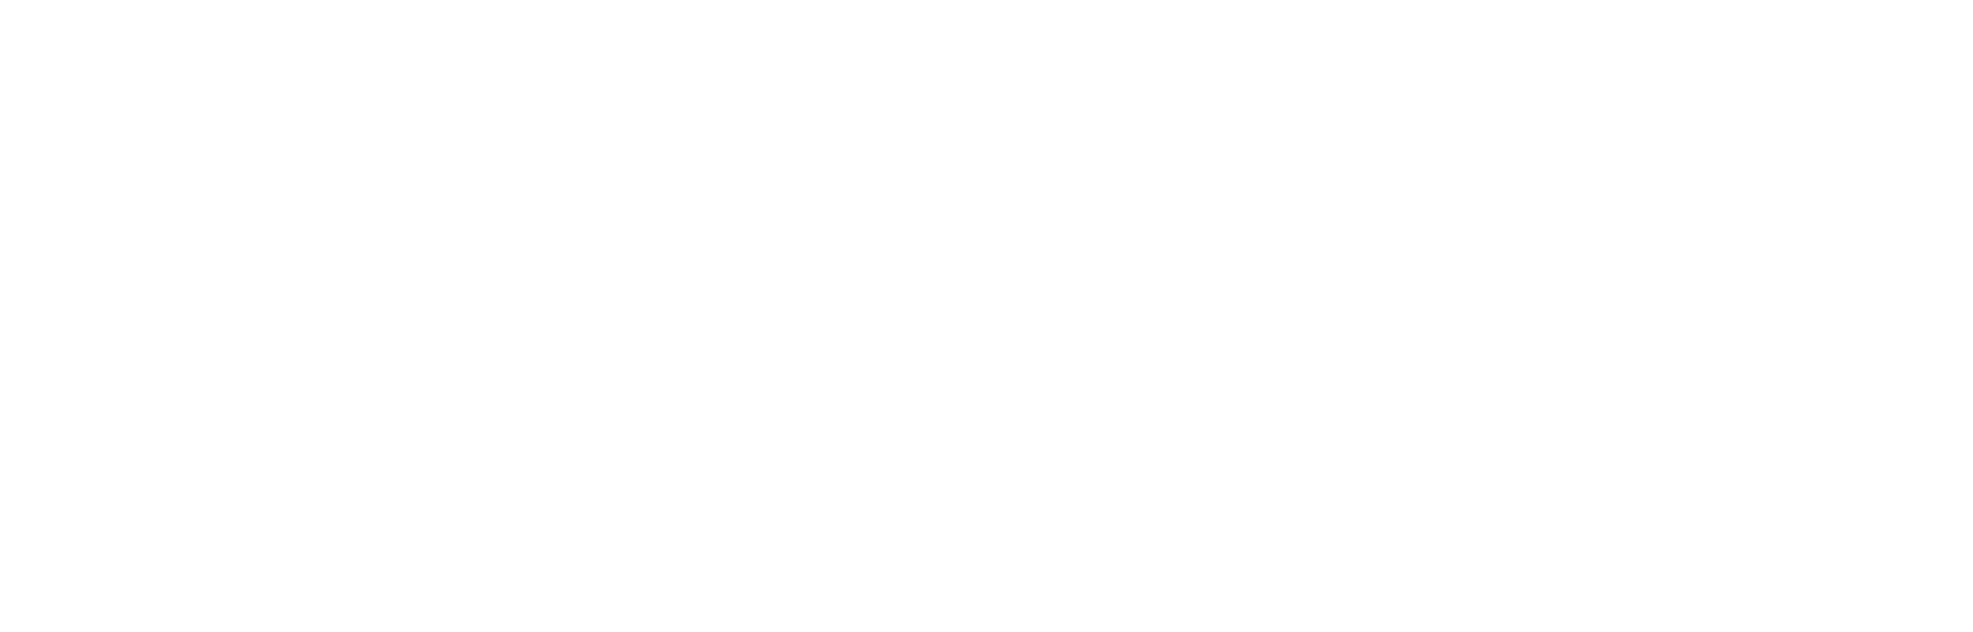 how-to-order-custom-awards